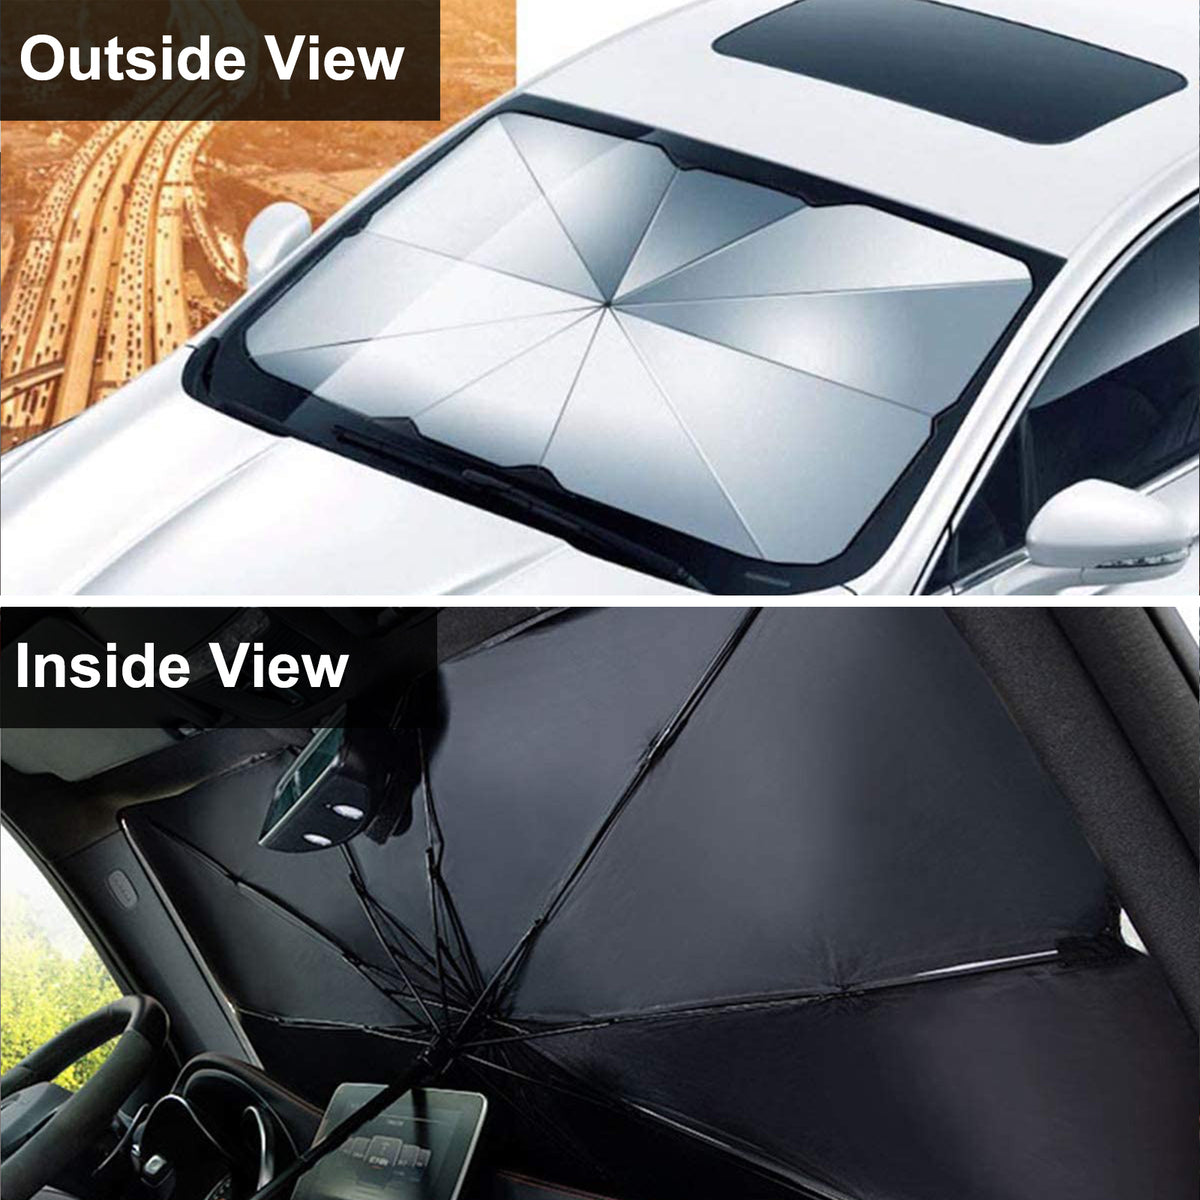 Upgraded Polarized Sun Visor for Car Interior Sun Protection Sun